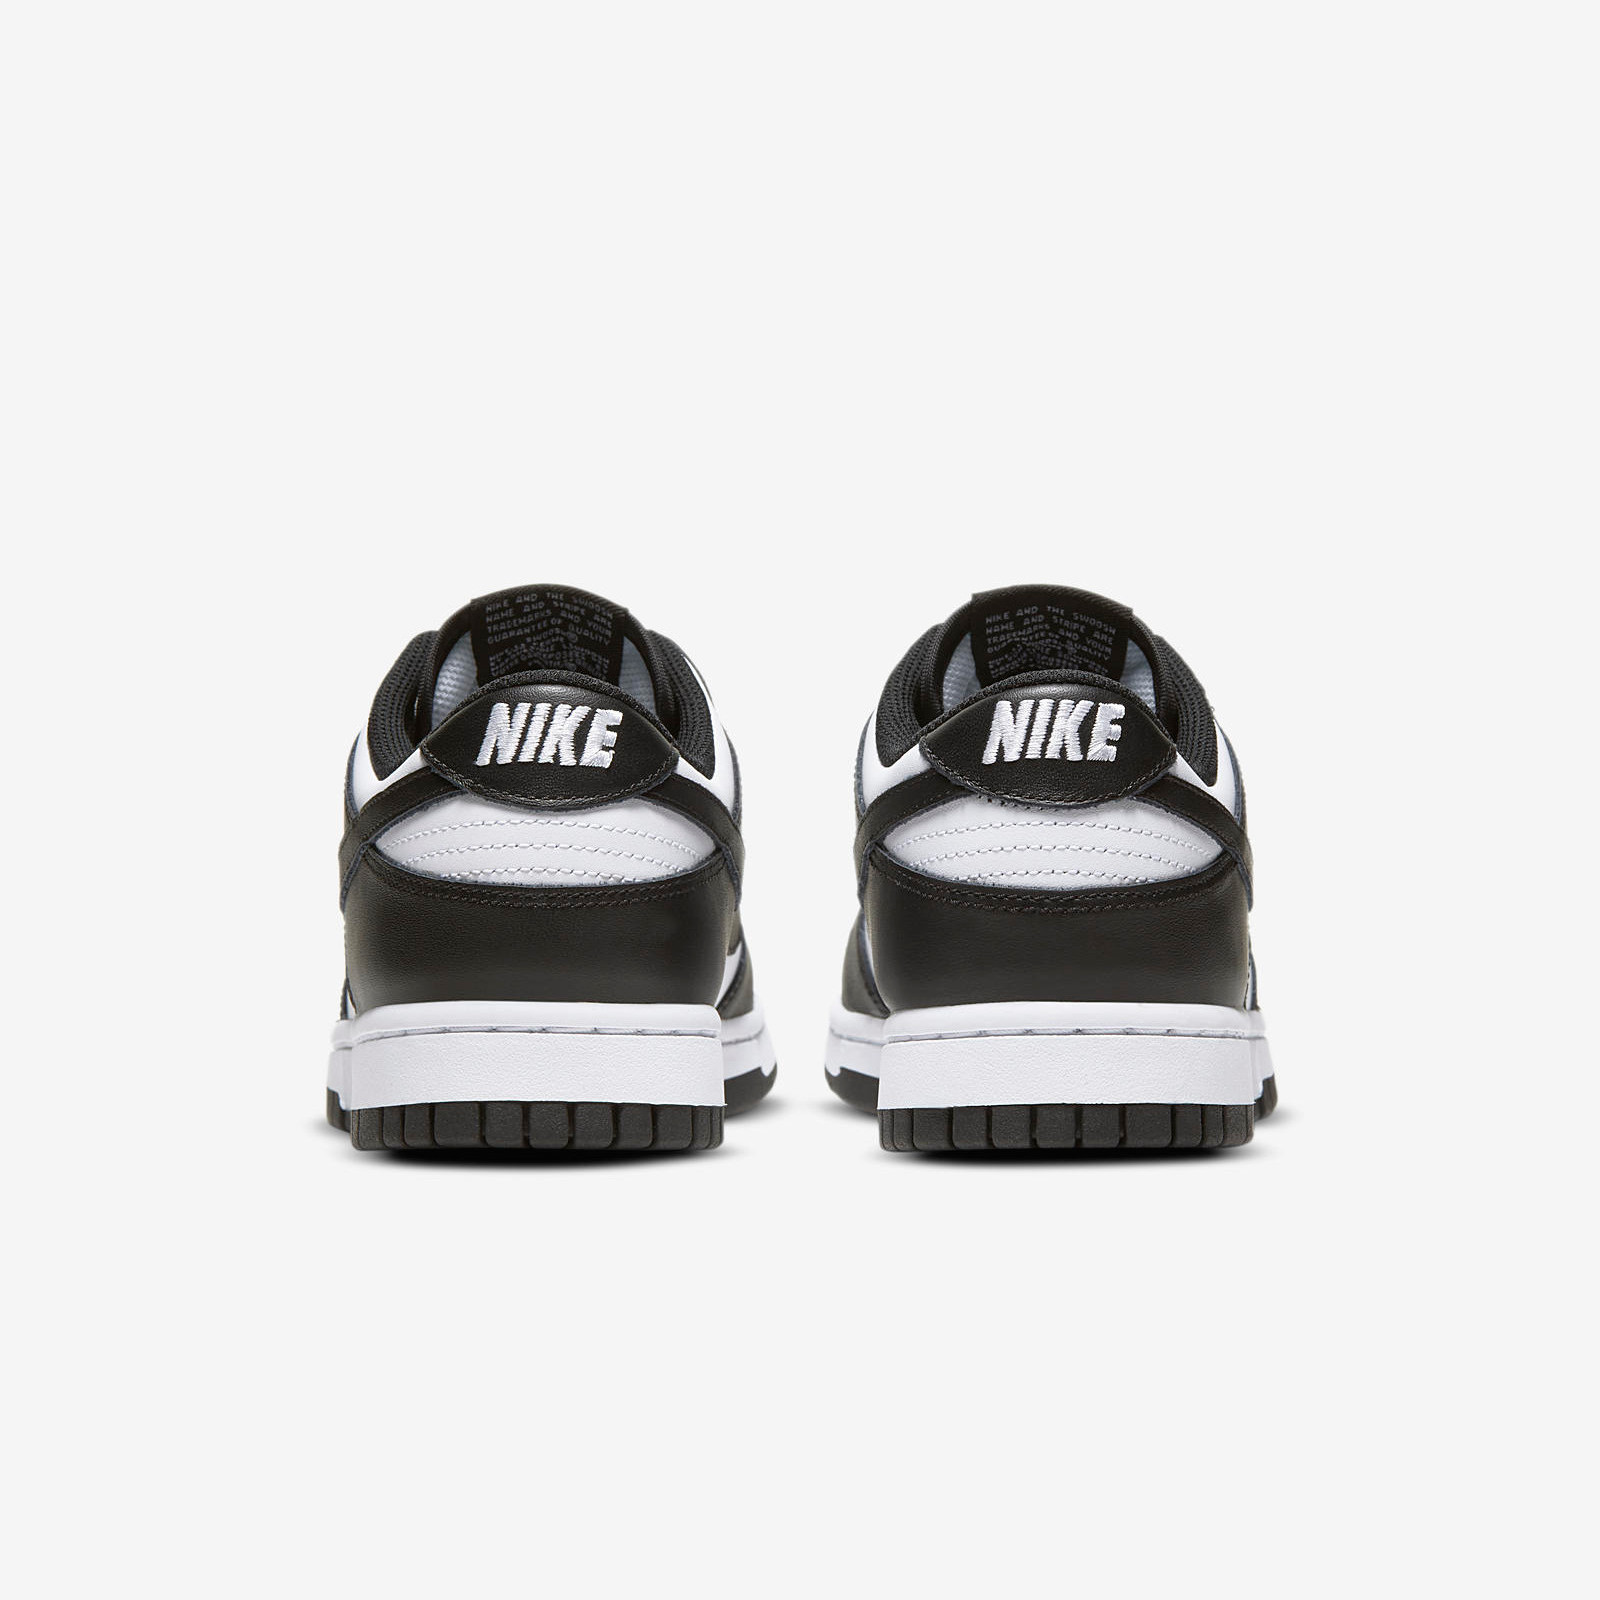 Nike Dunk Low
Black / White